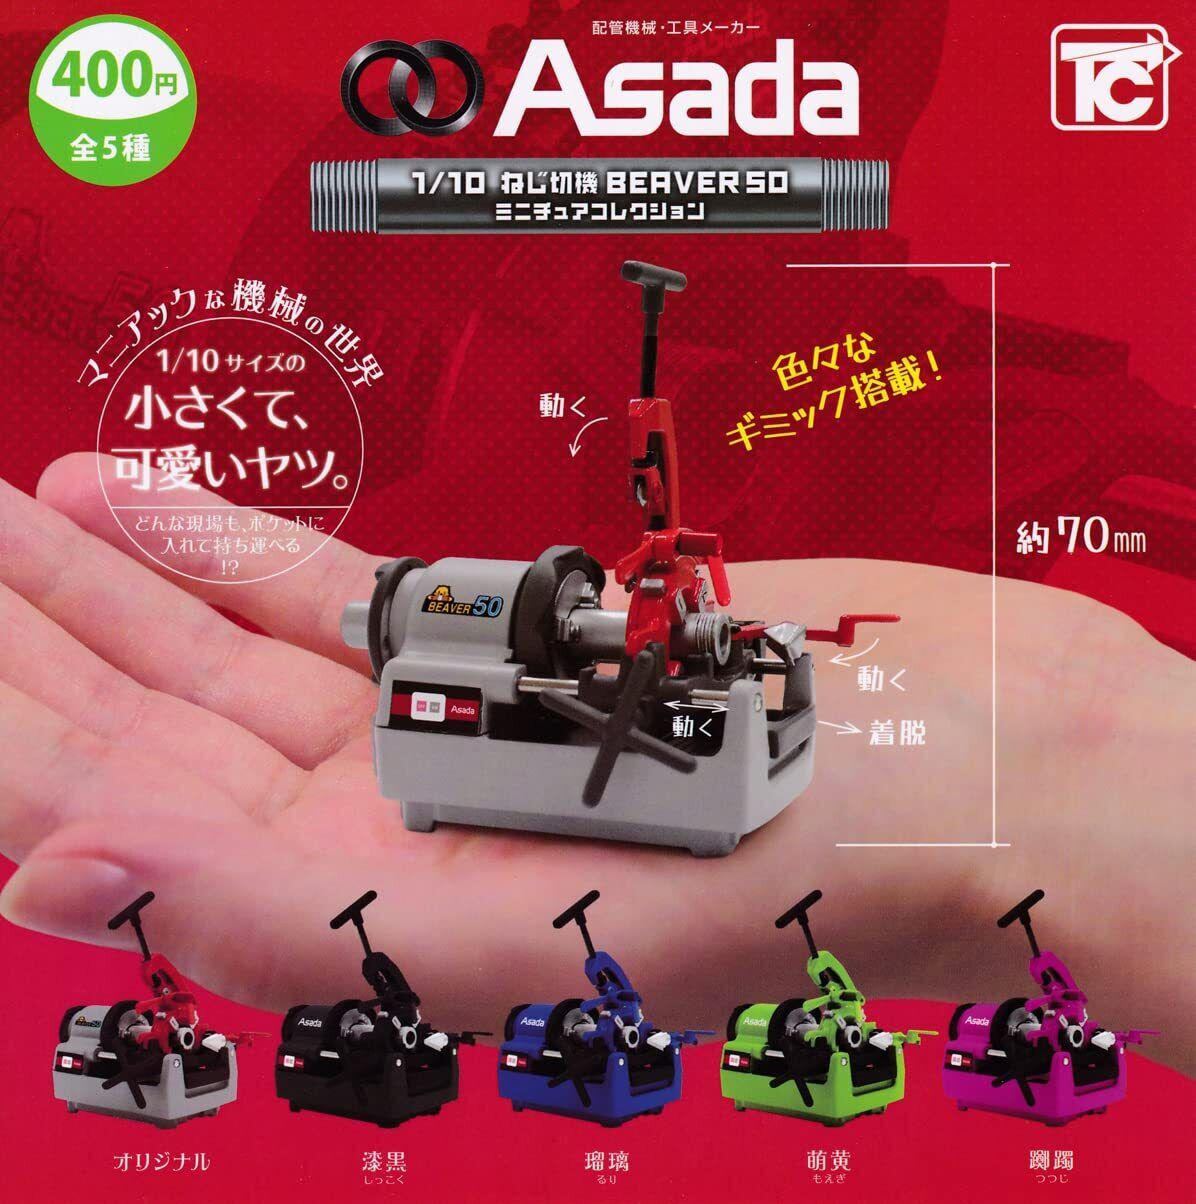 1/10 Asada Nejikiriki BEAVER 50 Miniature Collection Capsule Toy 6 Type Comp Set